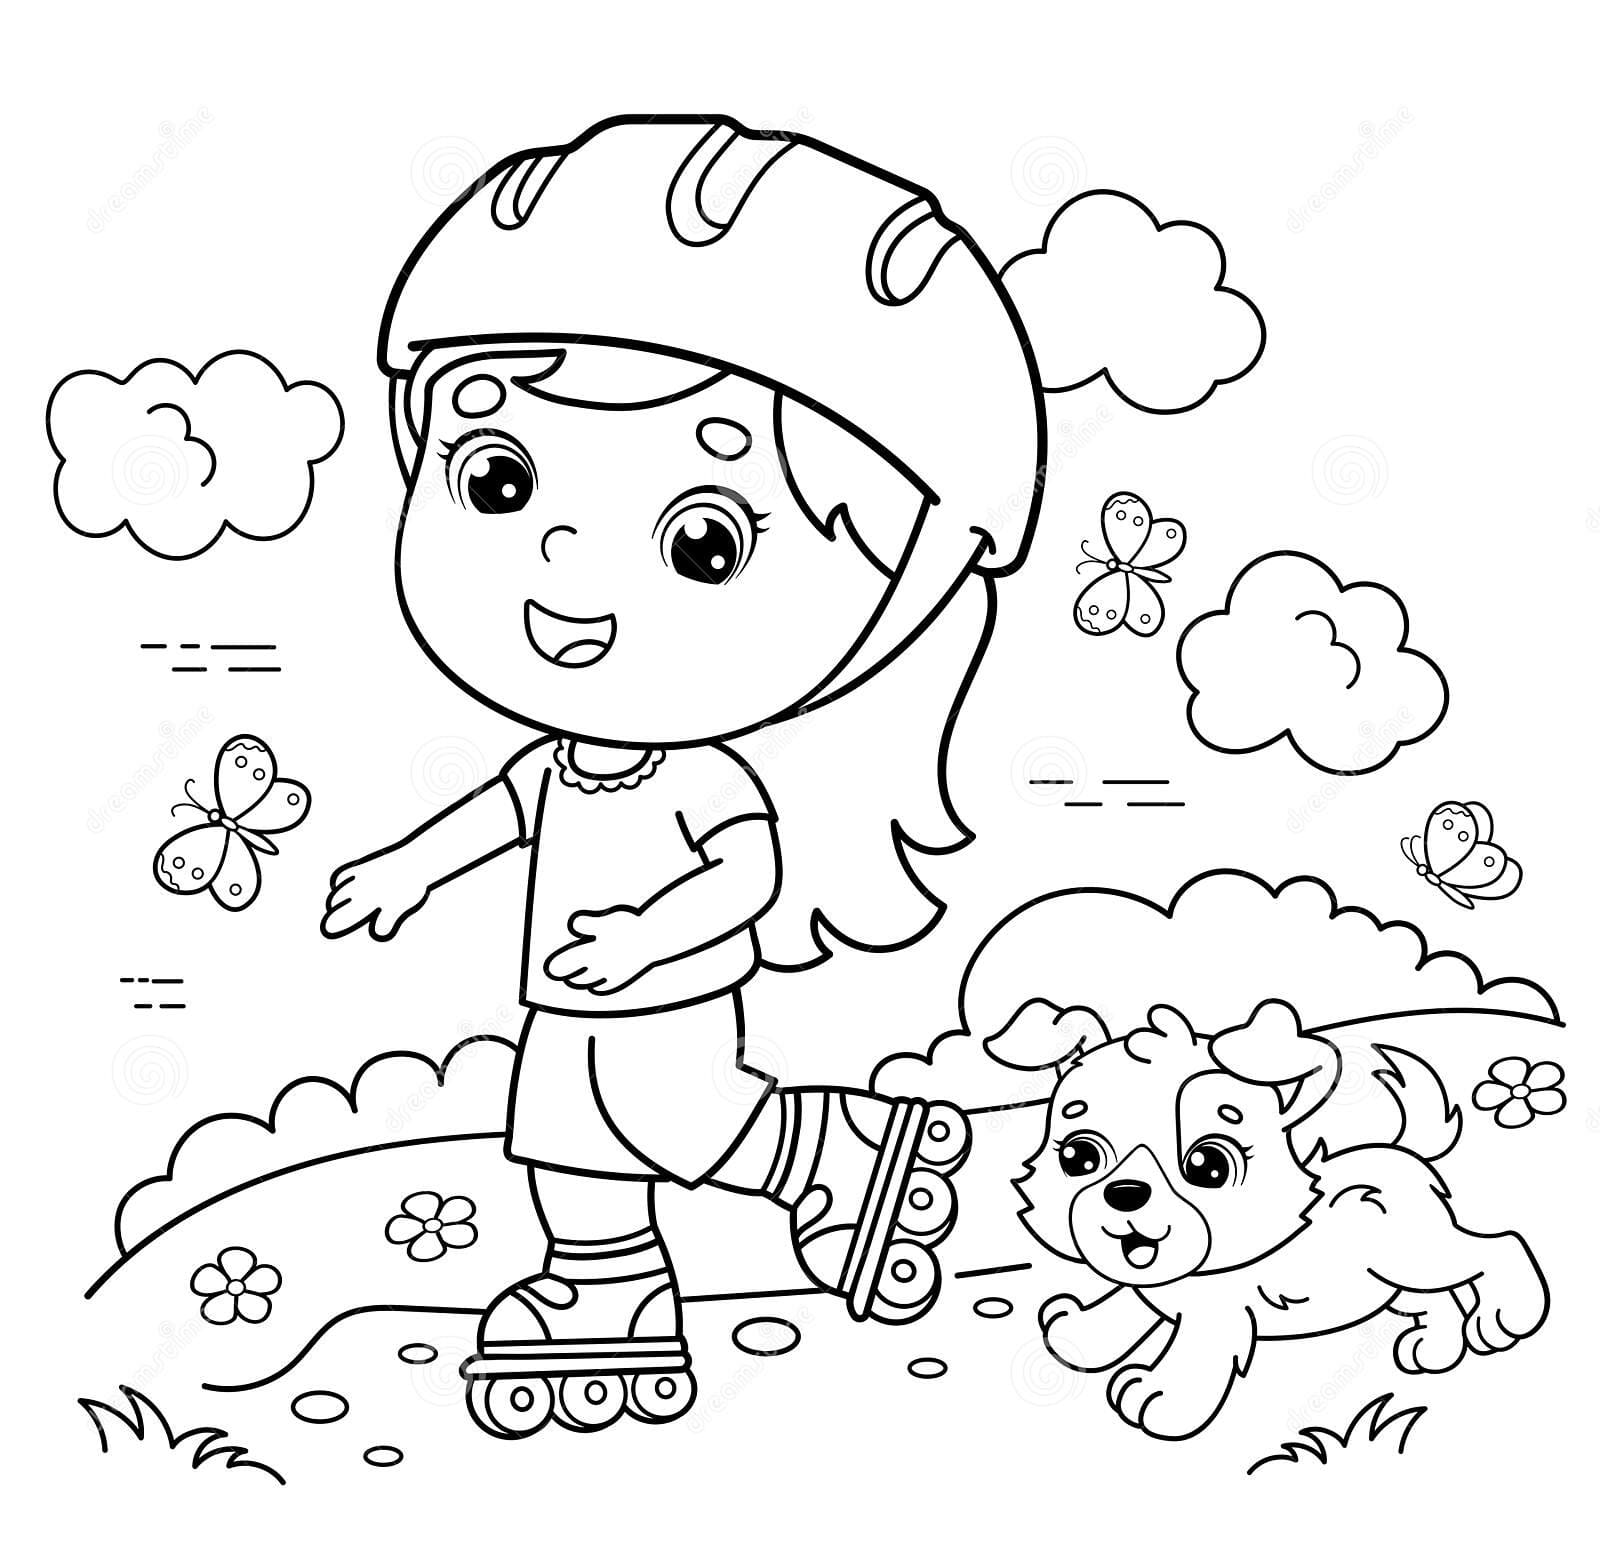 Cartoon Girl On The Roller Skates Image